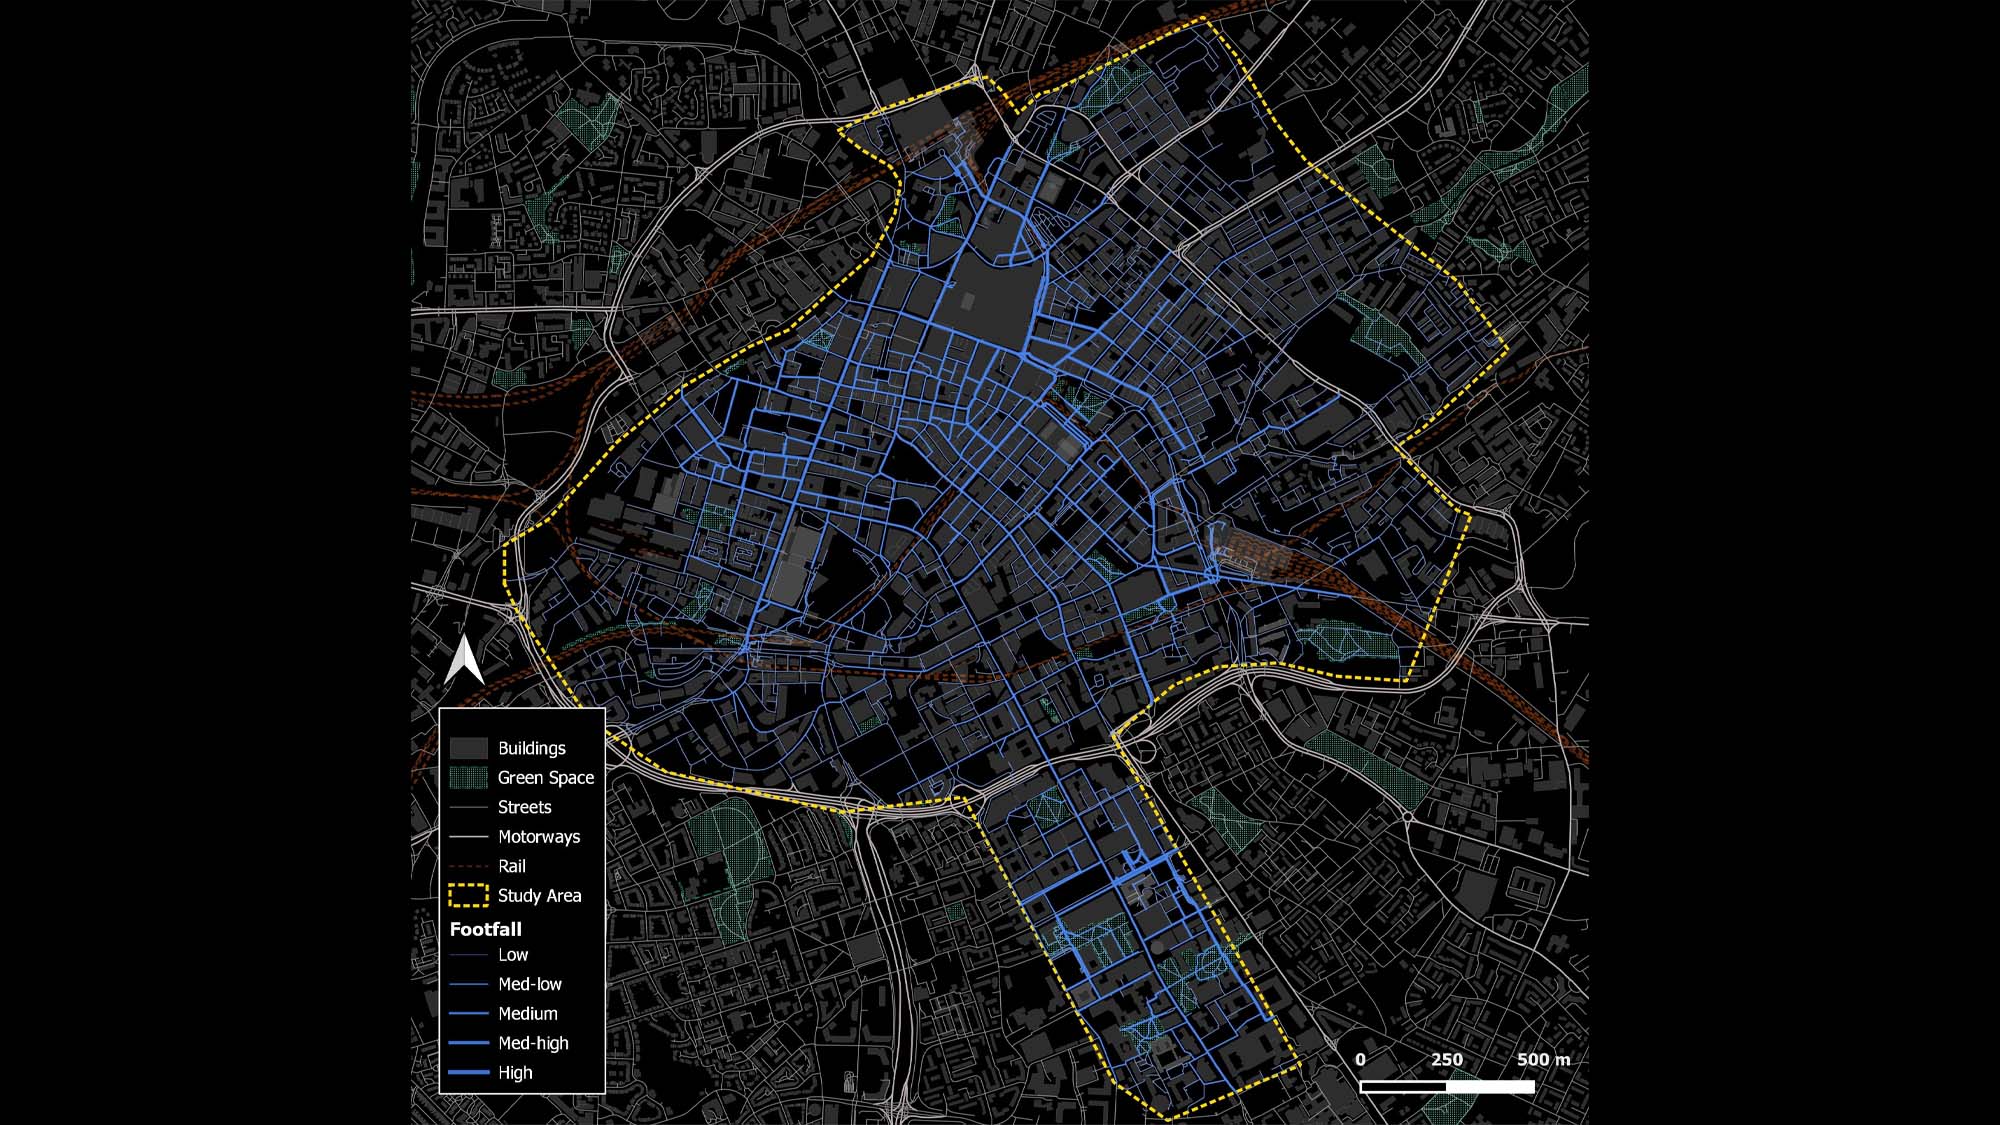 Manchester city centre study area map